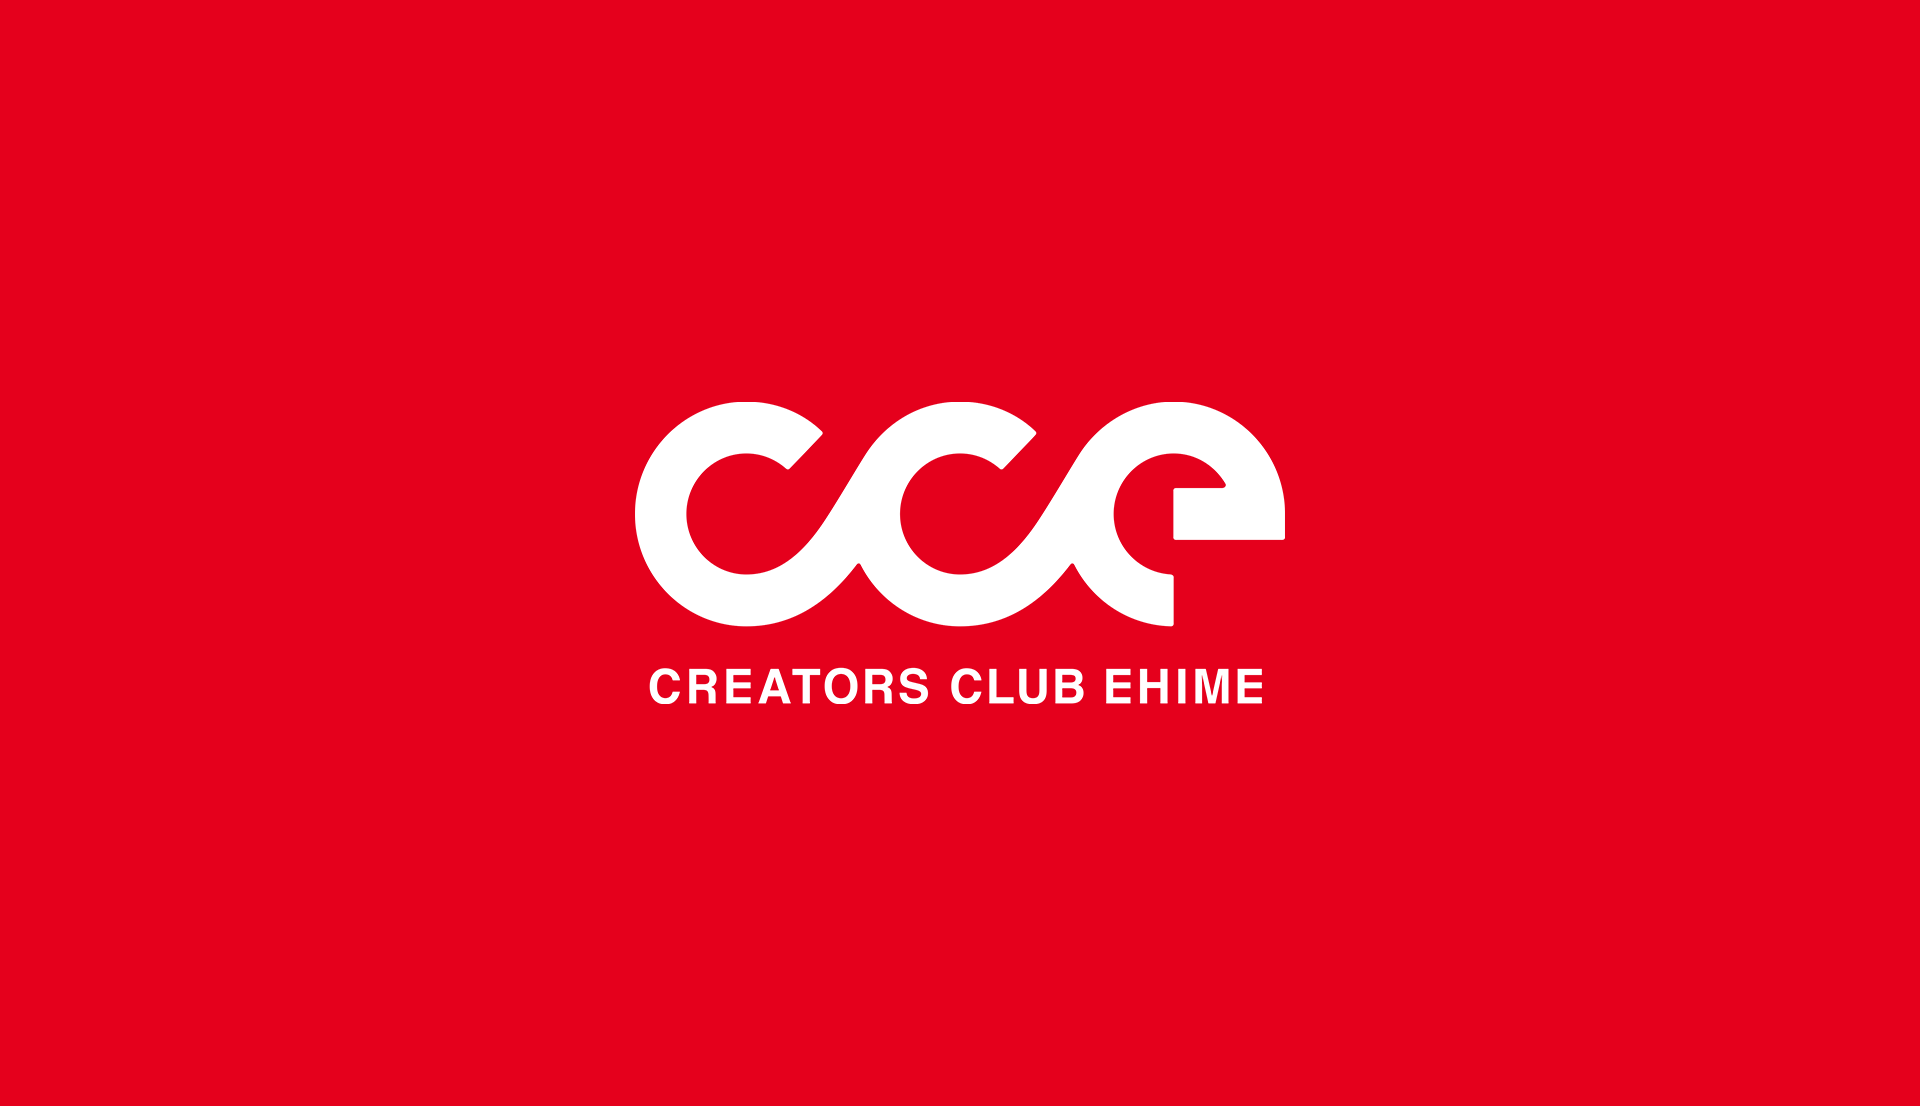 CREATORS CLUB EHIME